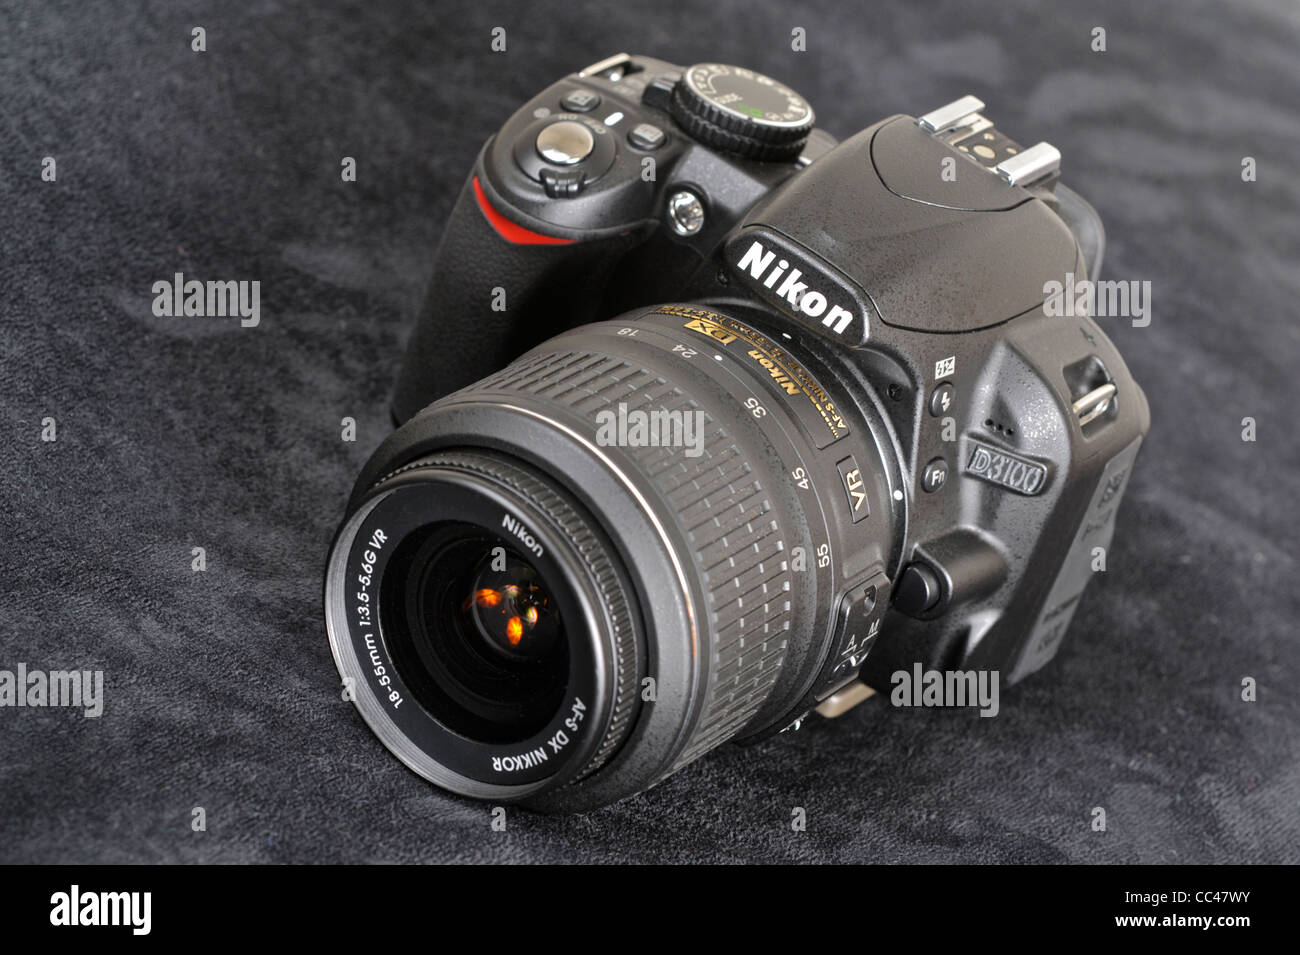 Nikon D3100 mit 18-55 Kit-Objektiv Stockfotografie - Alamy